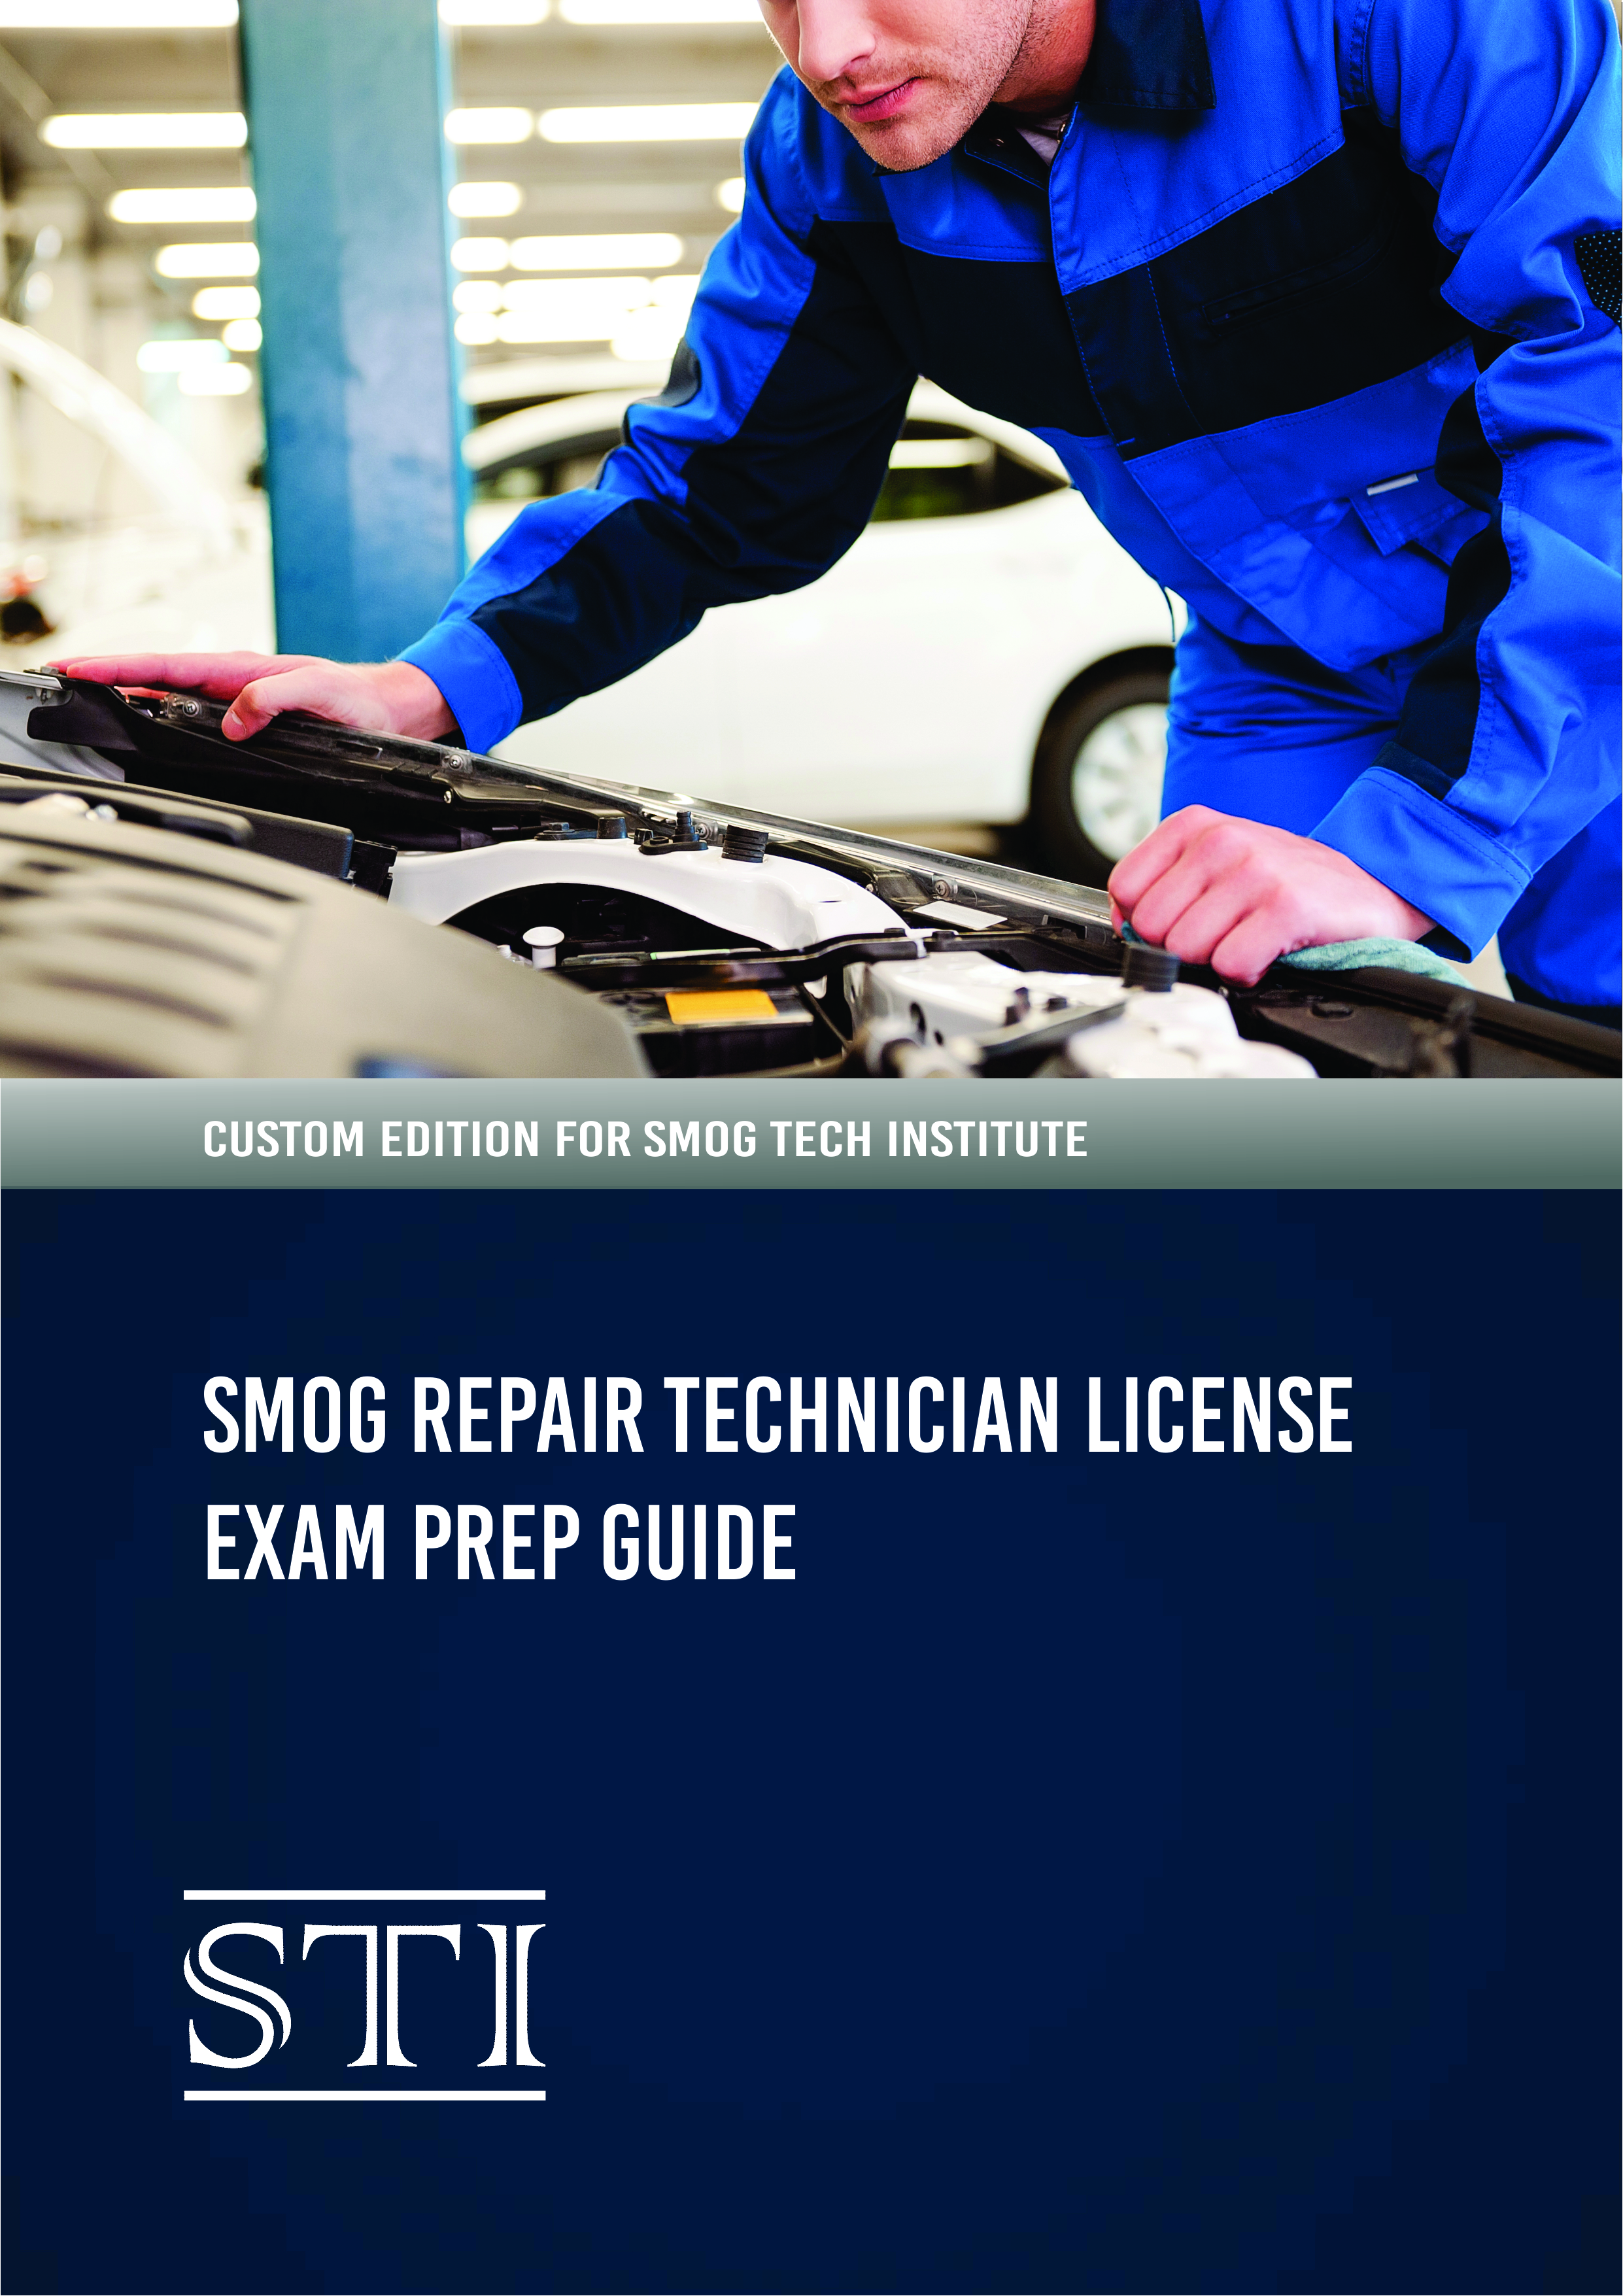 Smog Repair Exam Prep Study Guide Downloadable PDF